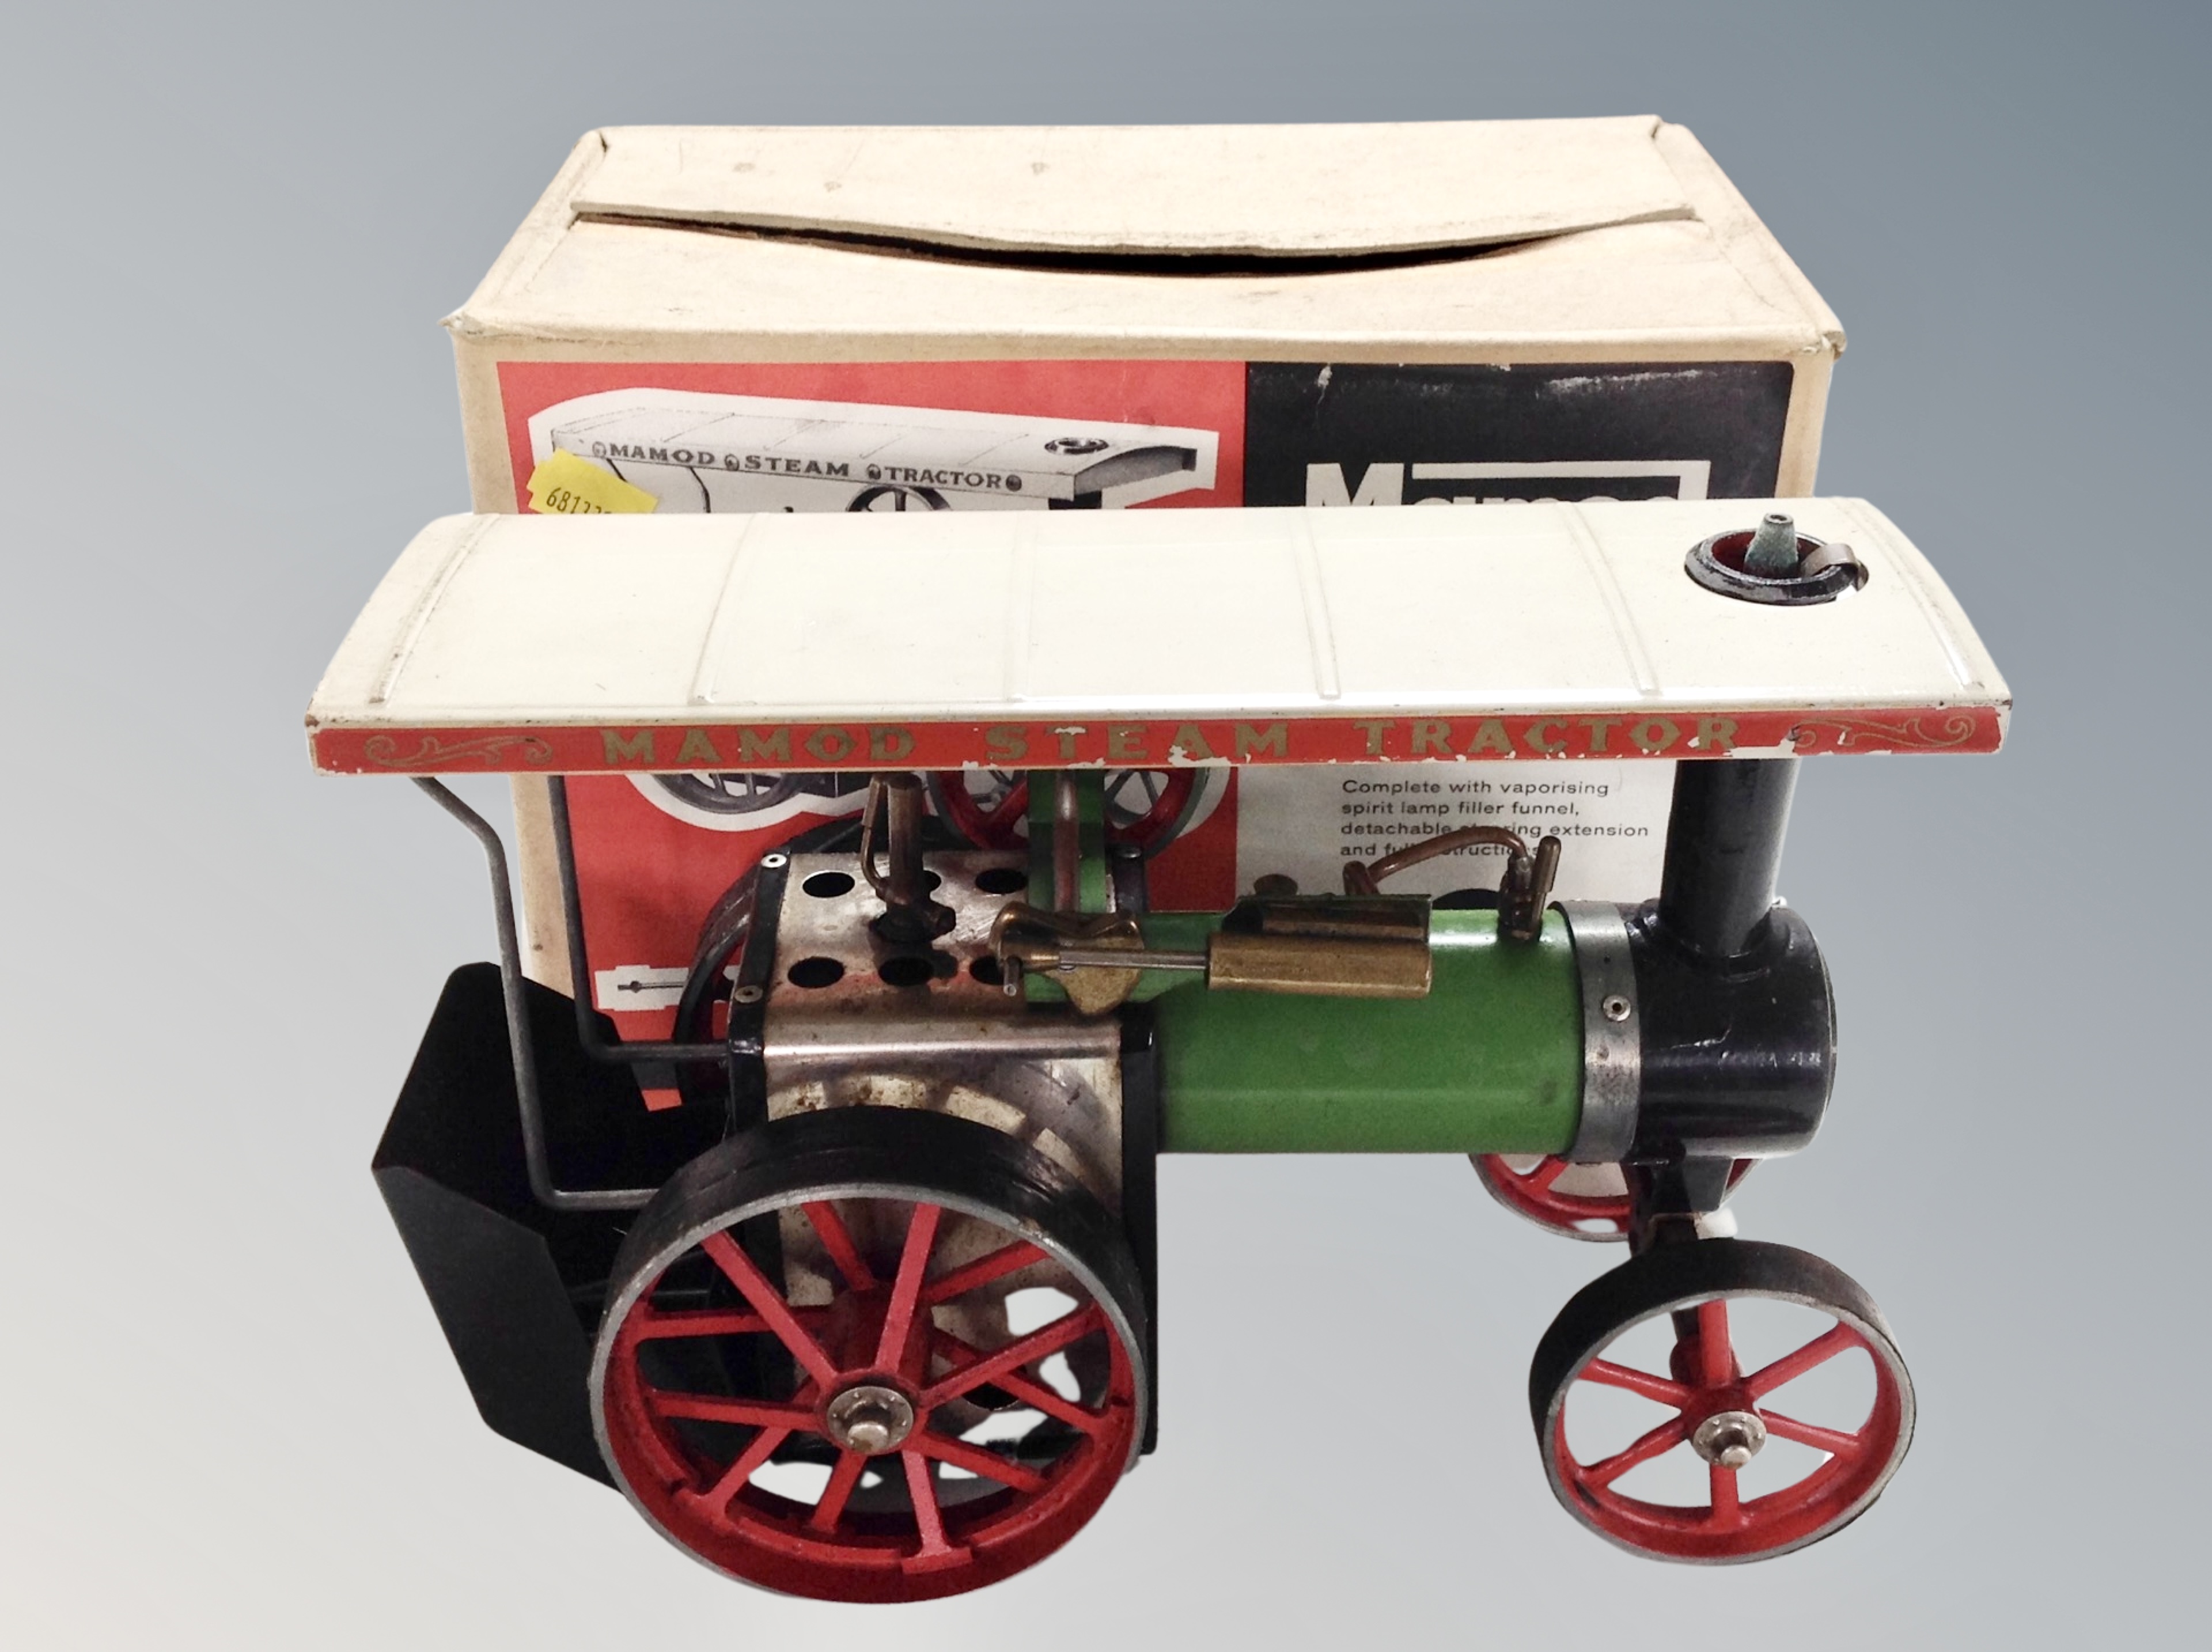 A Mamod traction engine in original box